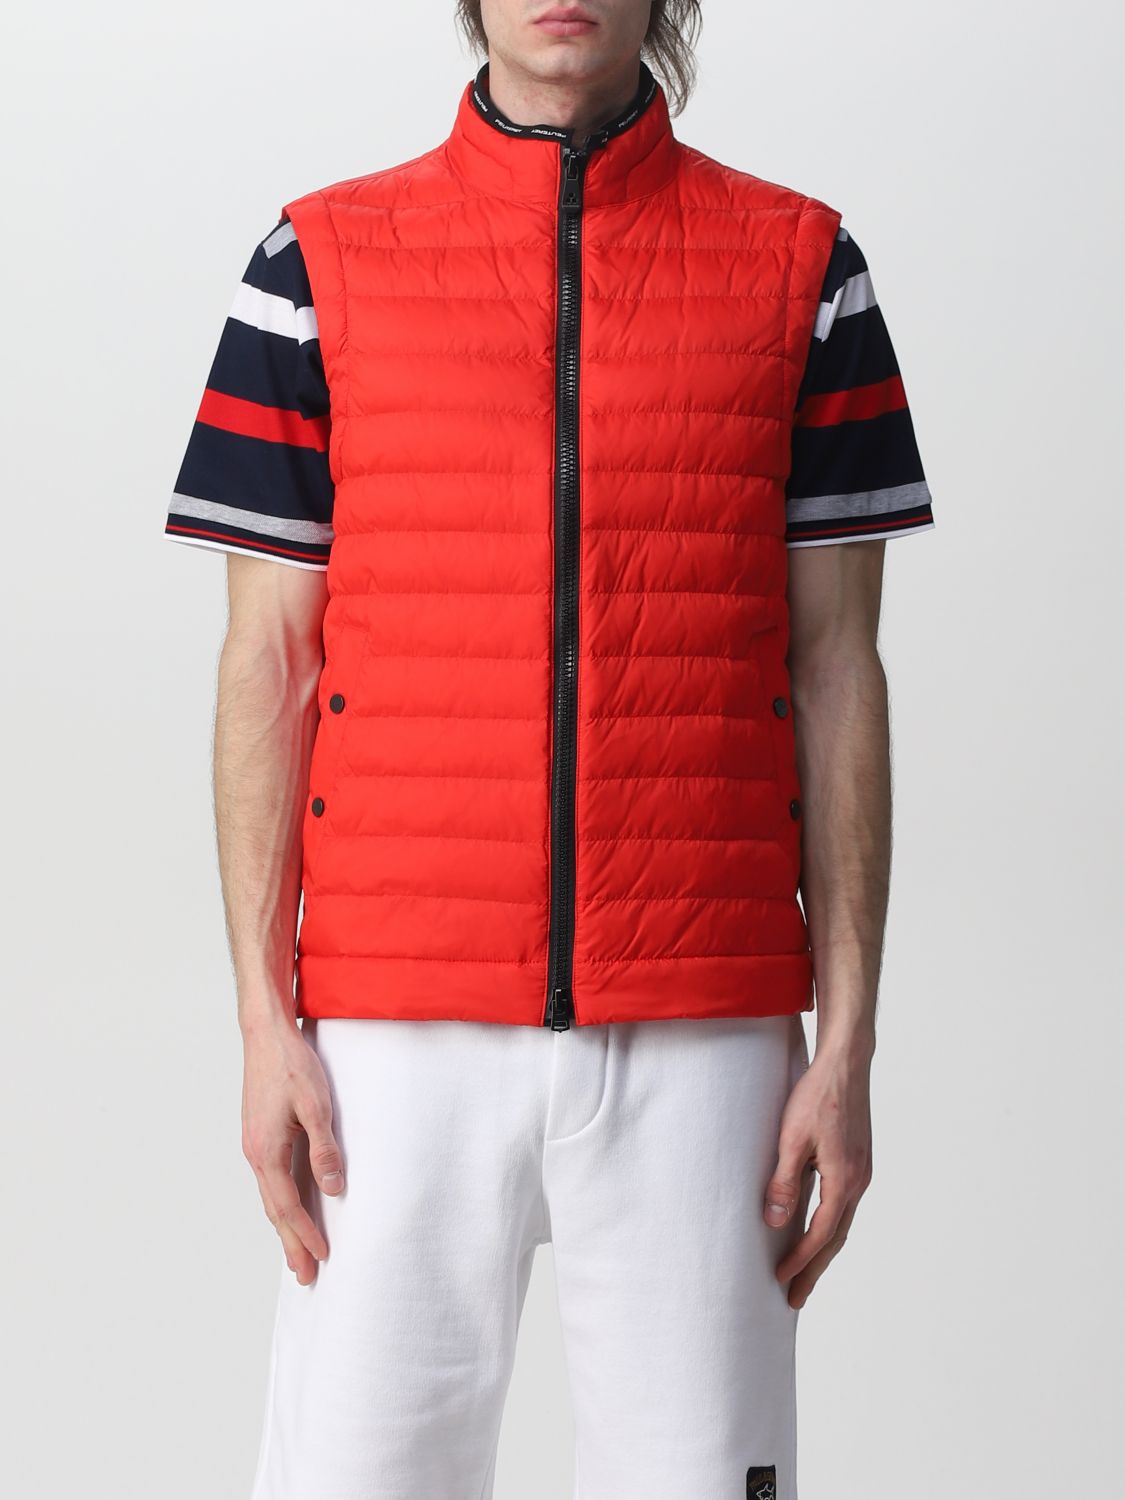 Peuterey Men's Red Polyester Vest